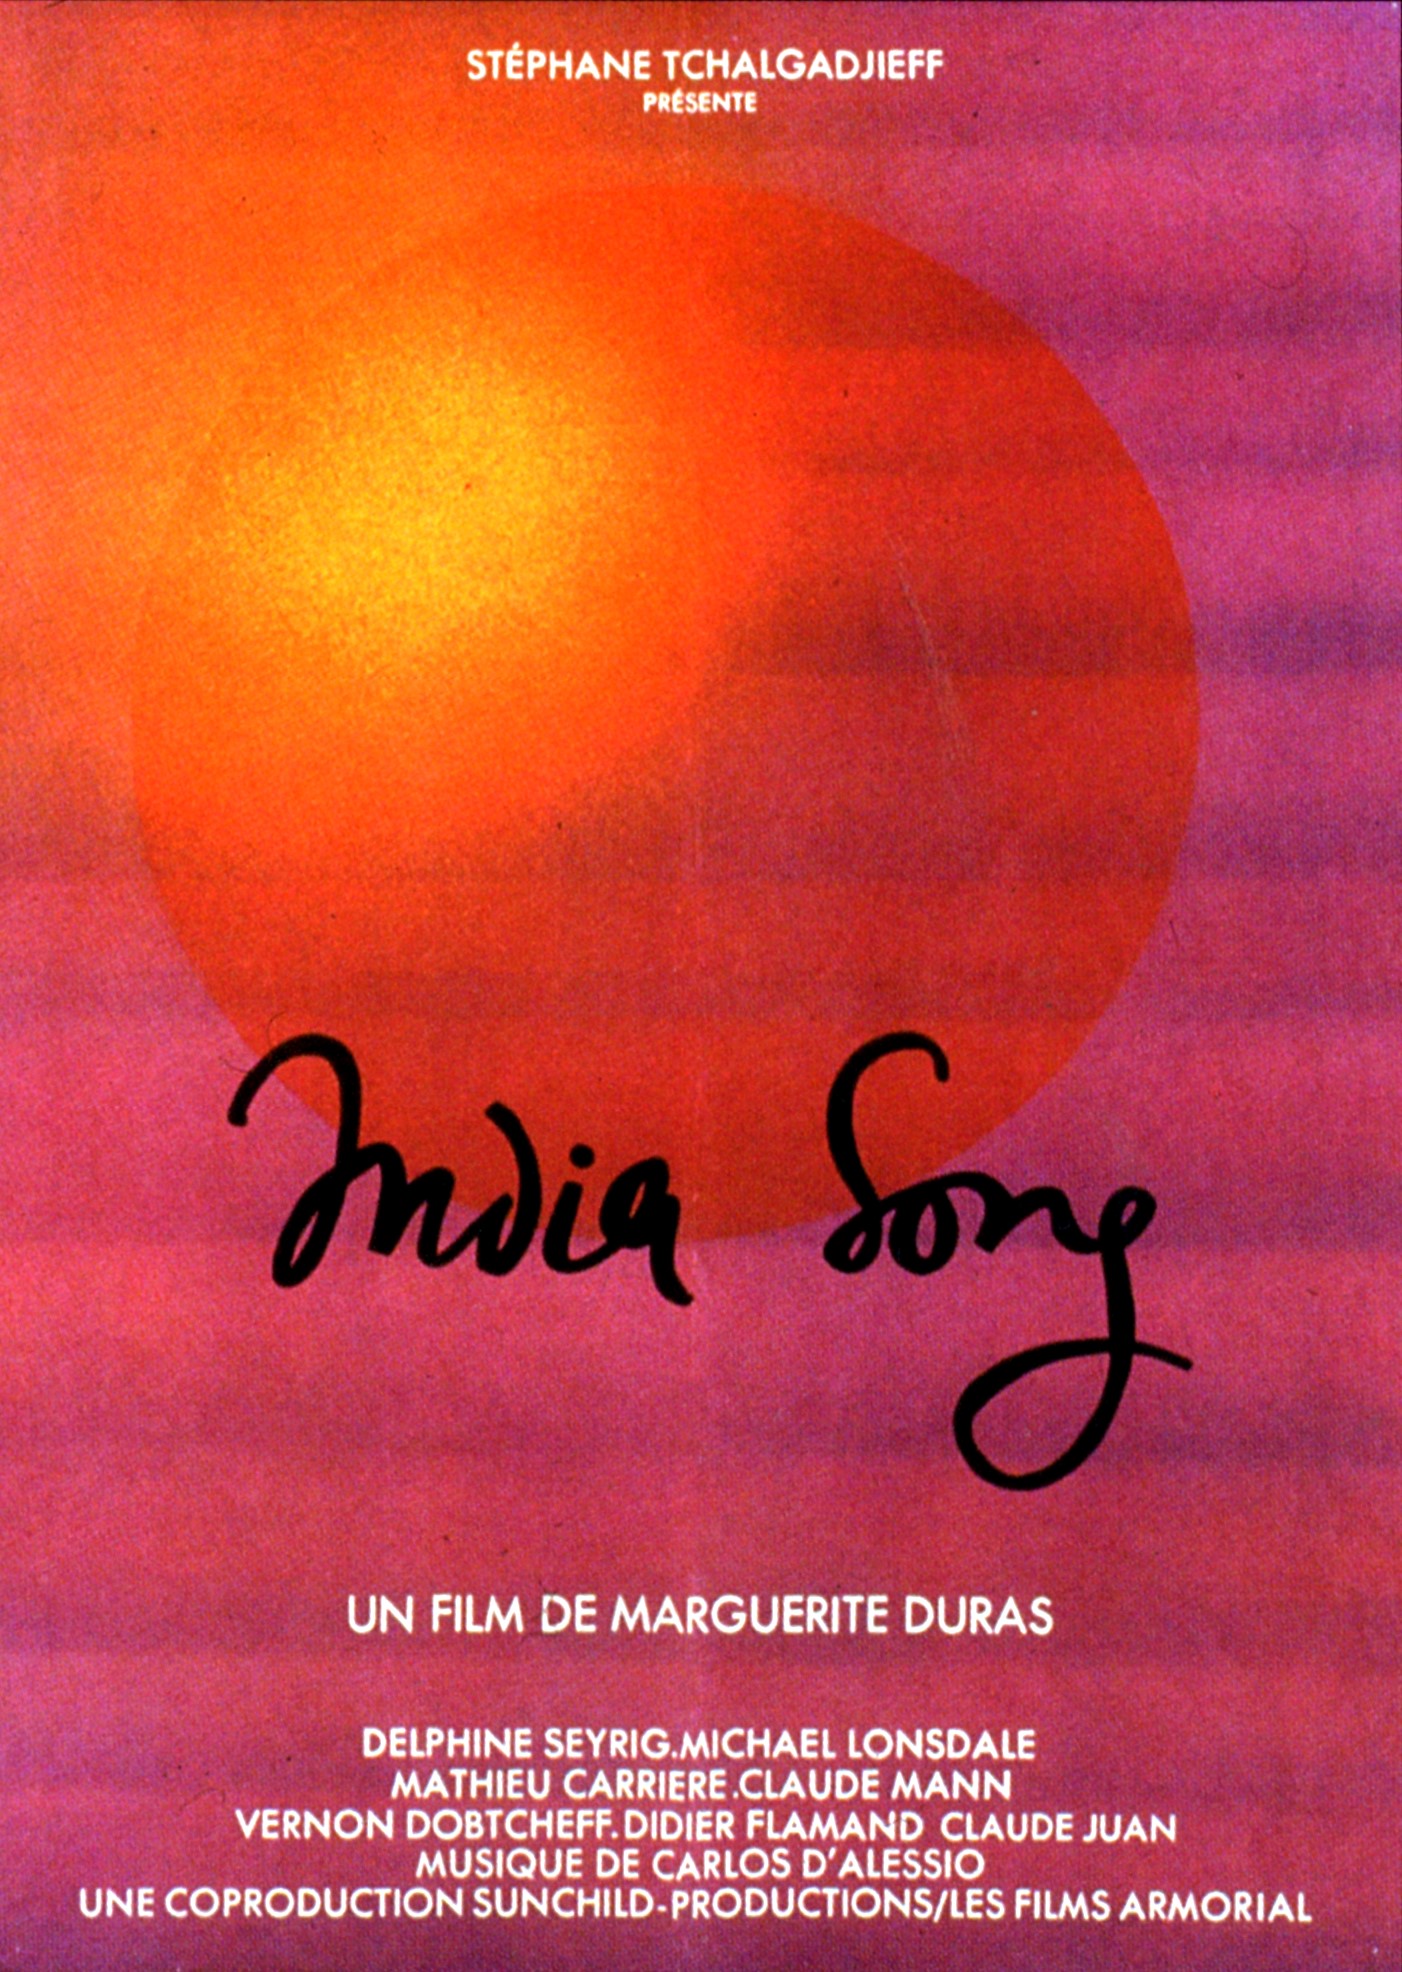 India Song (Marguerite Duras, 1975)